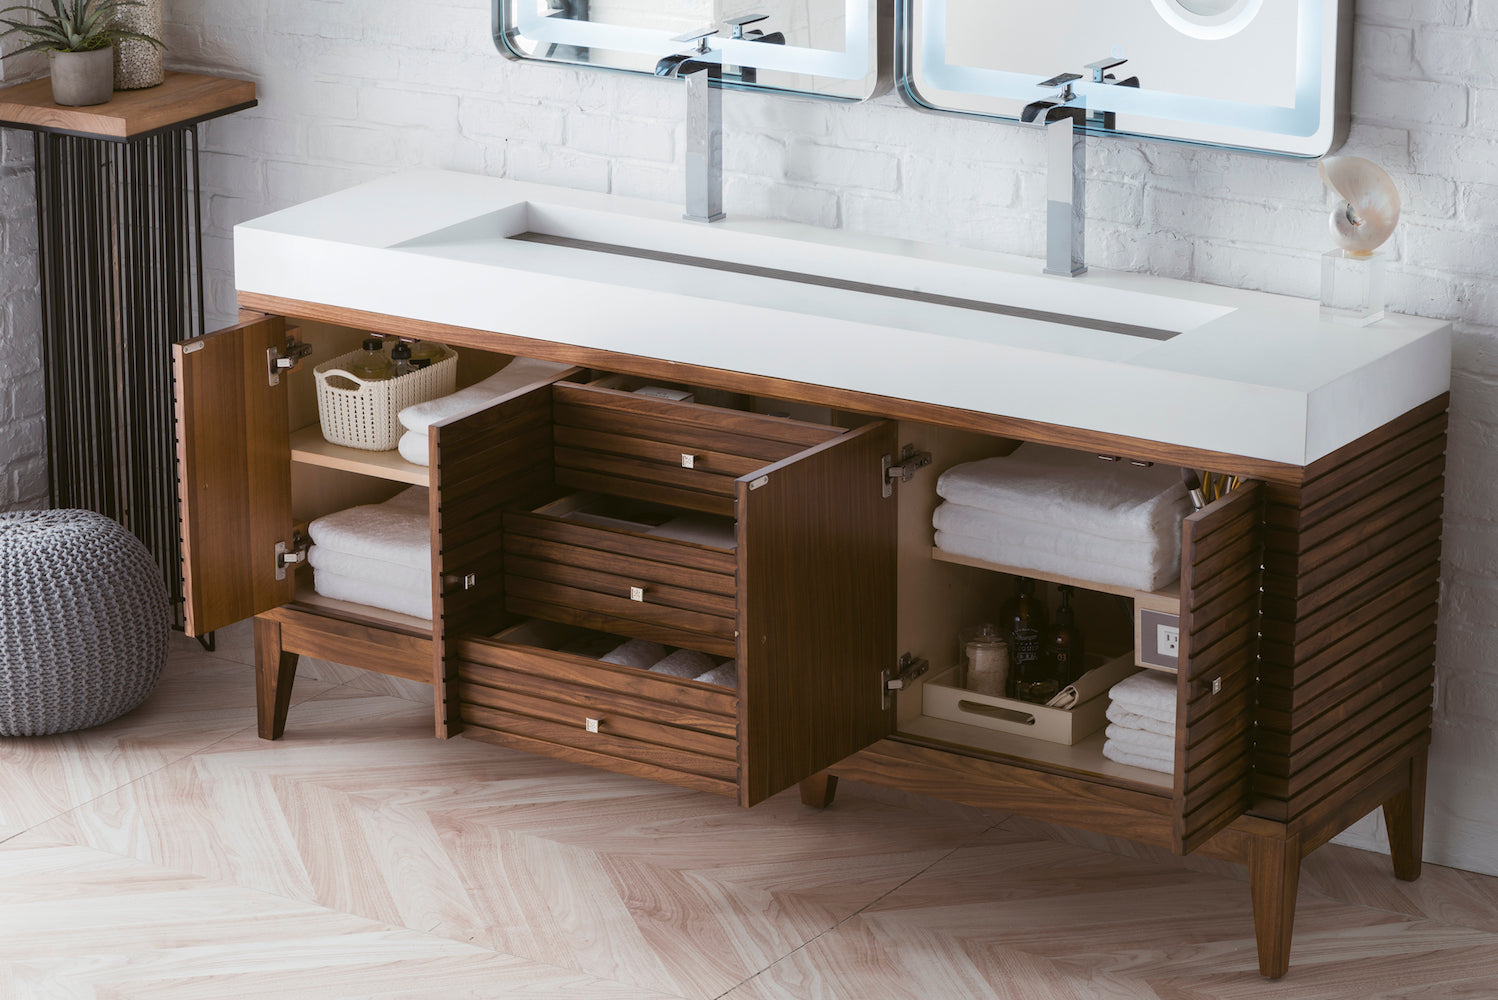 72" Linear Double Sink Bathroom Vanity, Mid Century Walnut